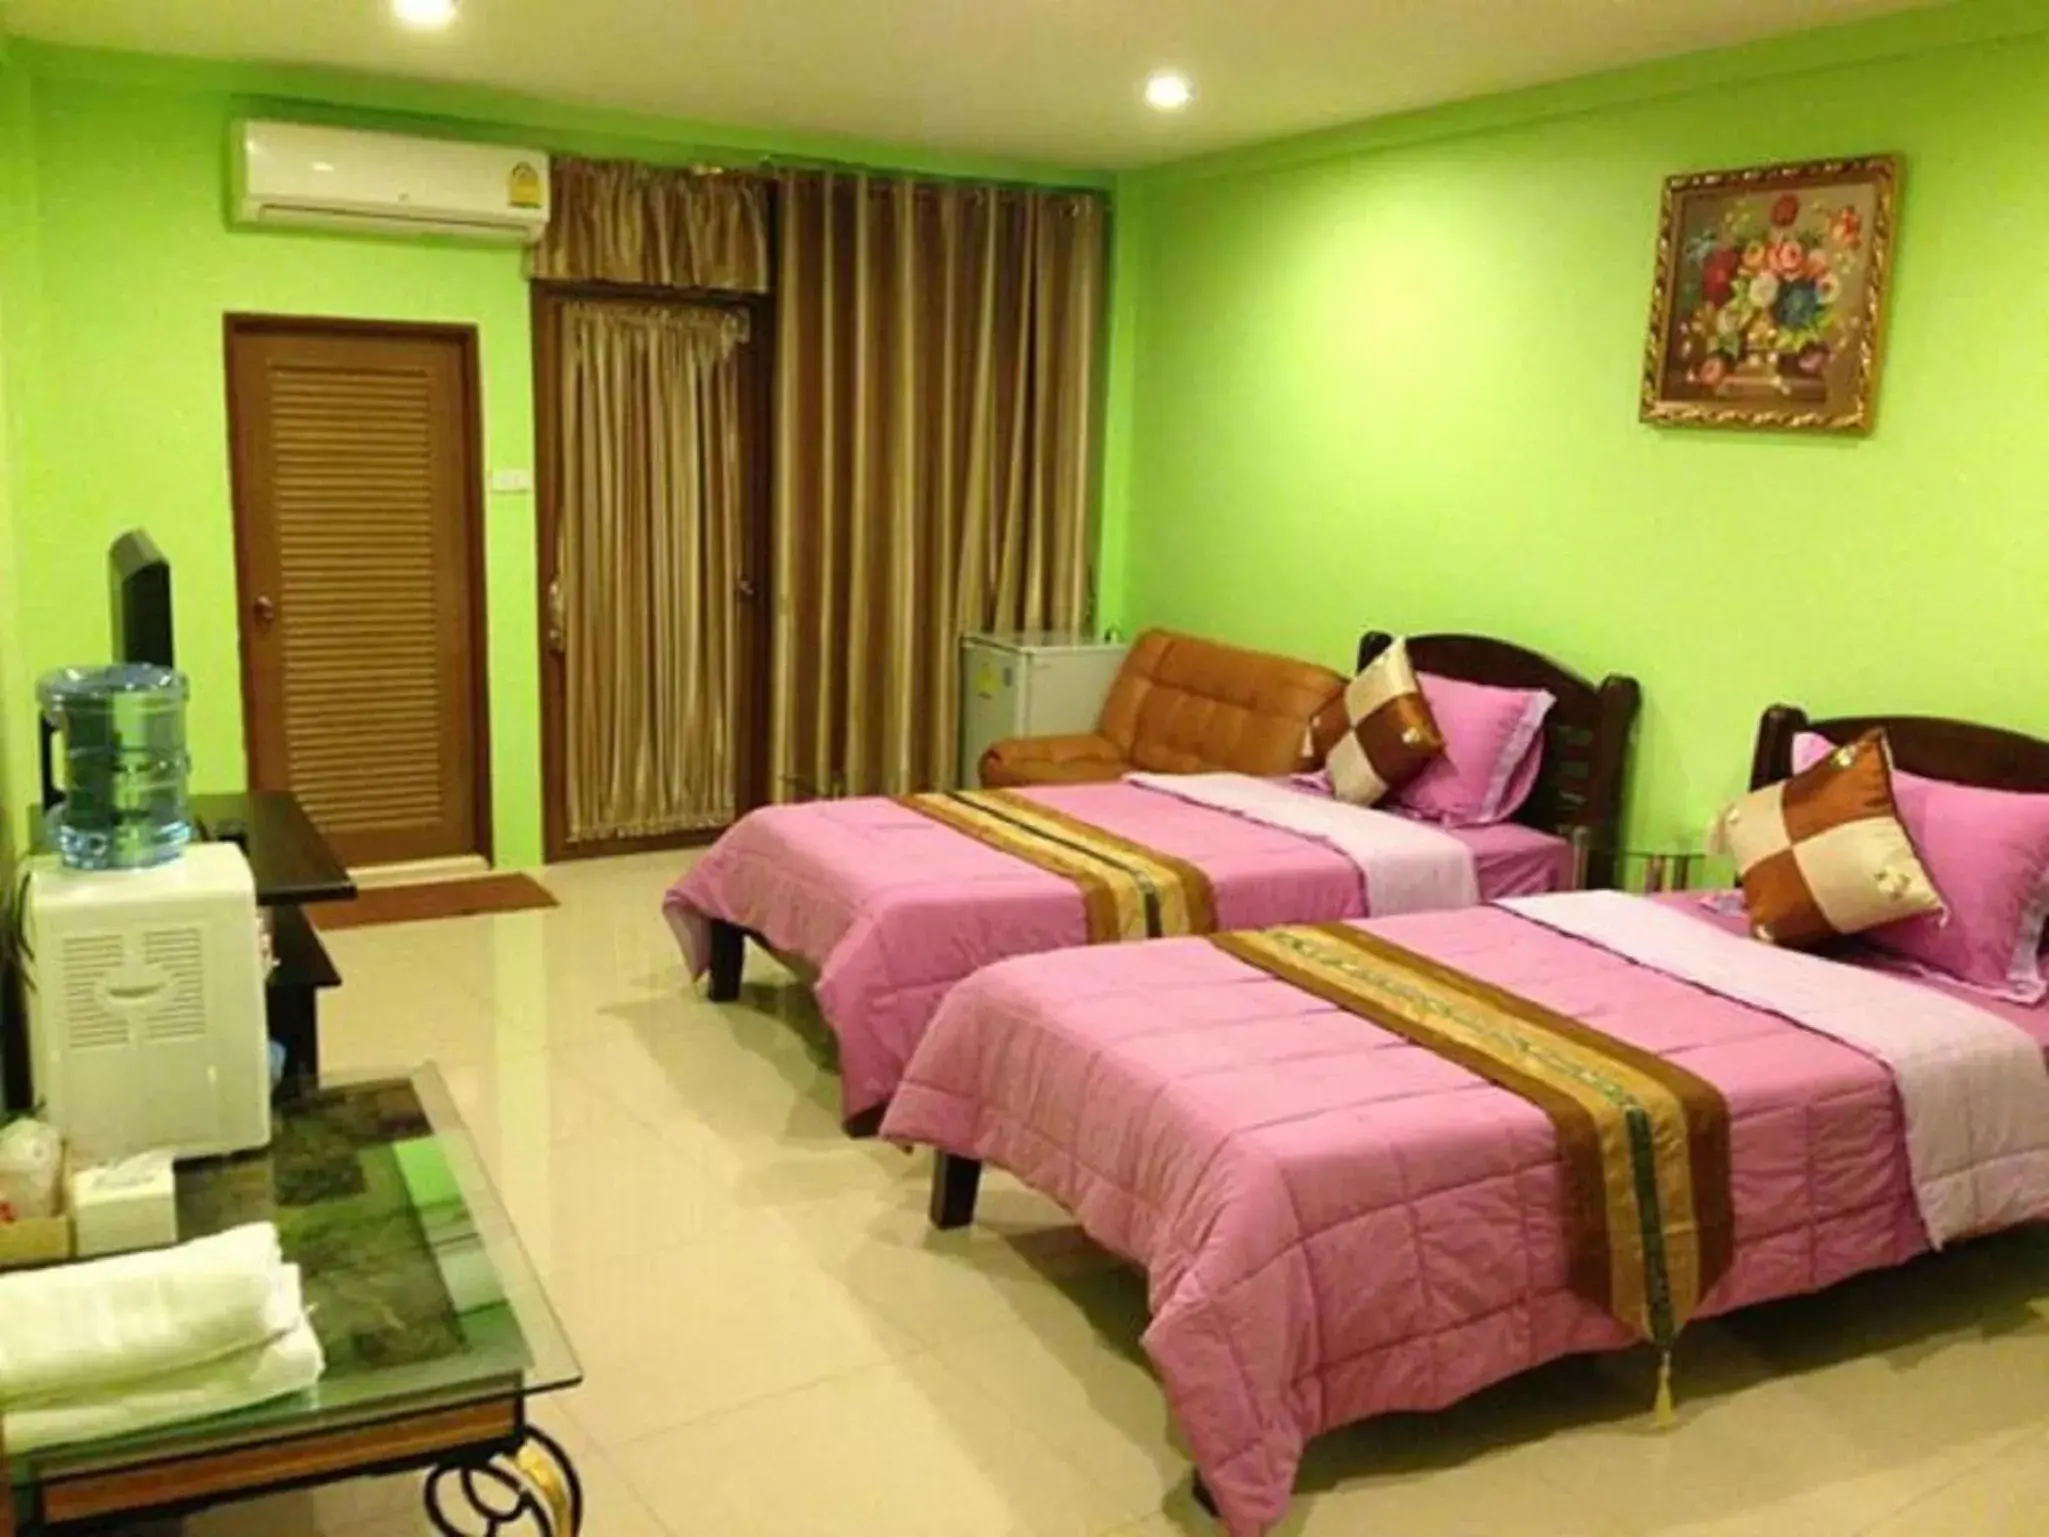 Bed in Penang Palace